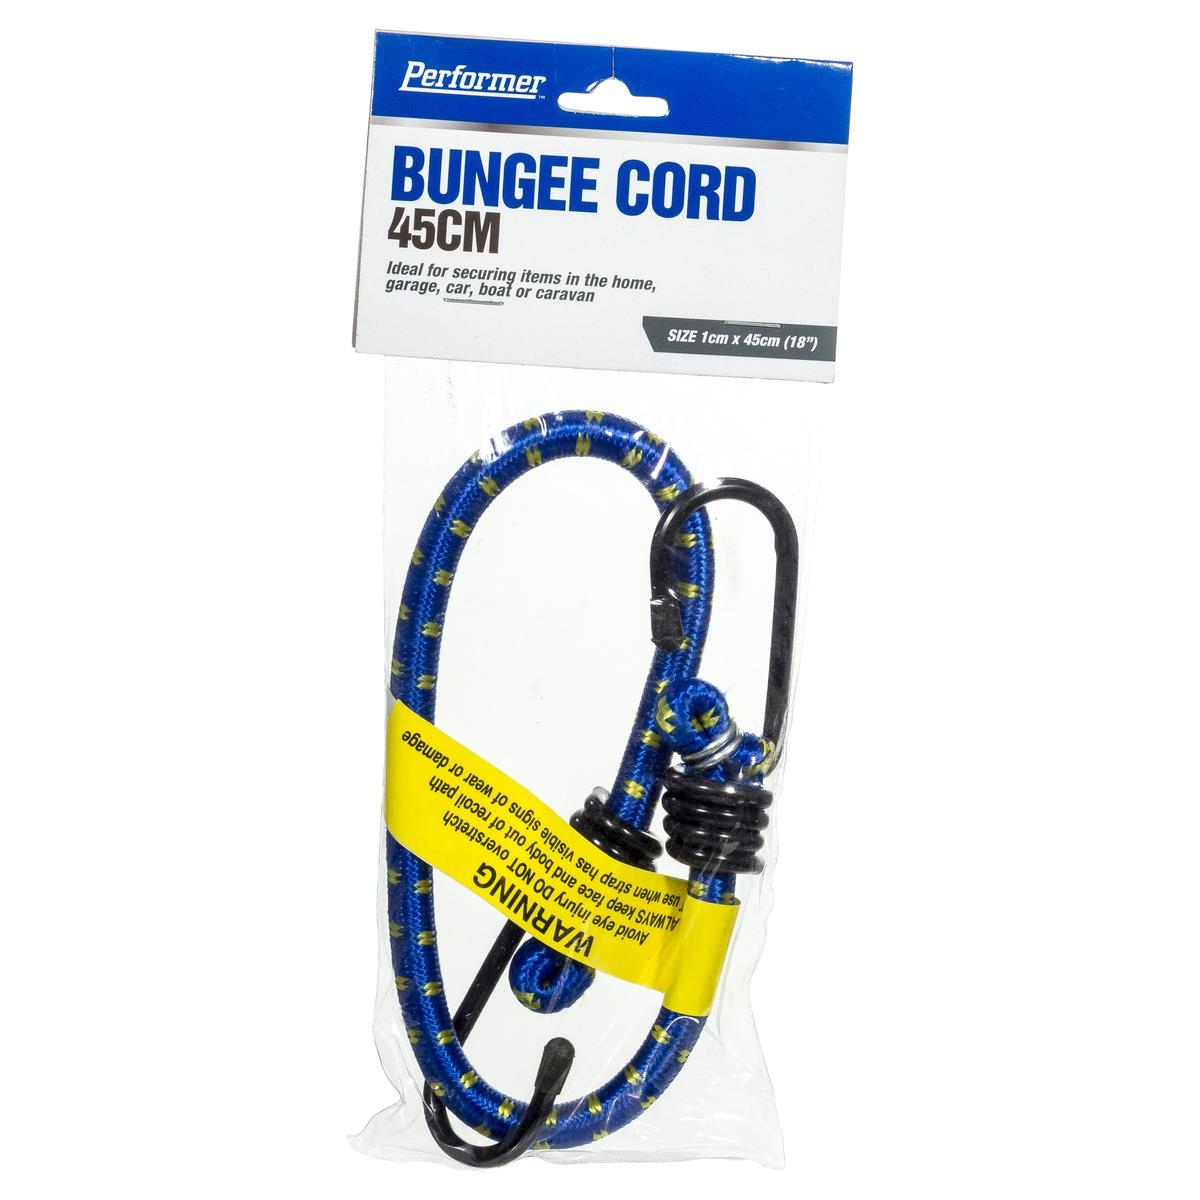 Bungee Cord - 45cm